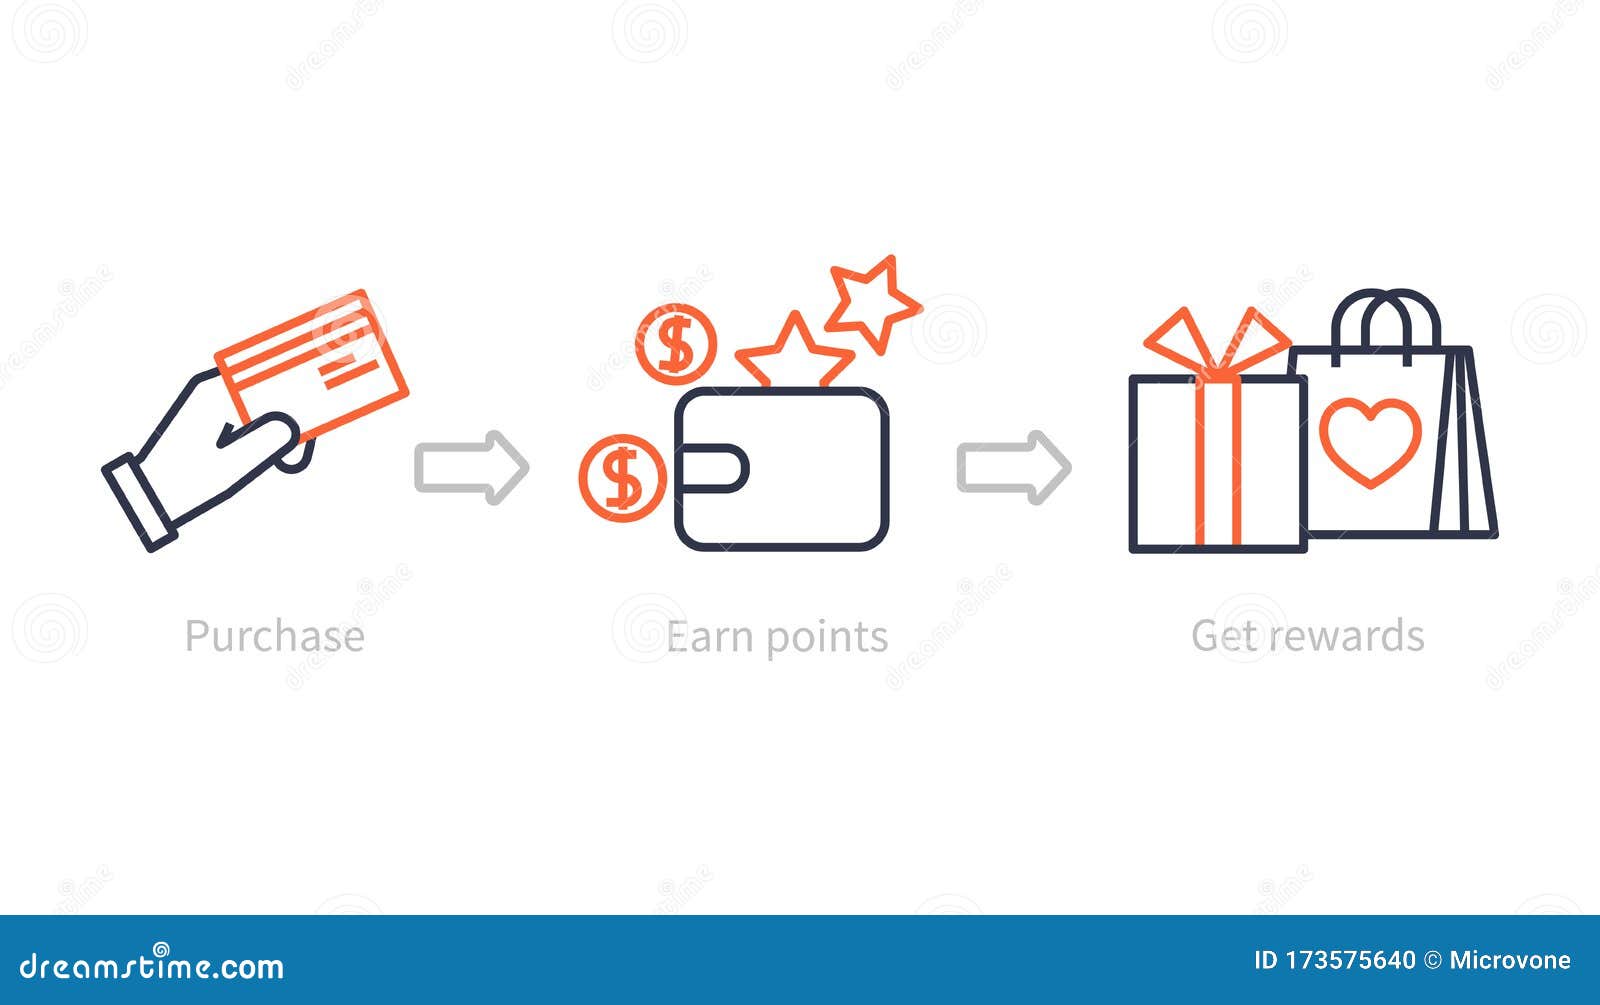 earn points. benefits program, shopping reward and bonus. customer earning gifts, marketing loyalty system. business